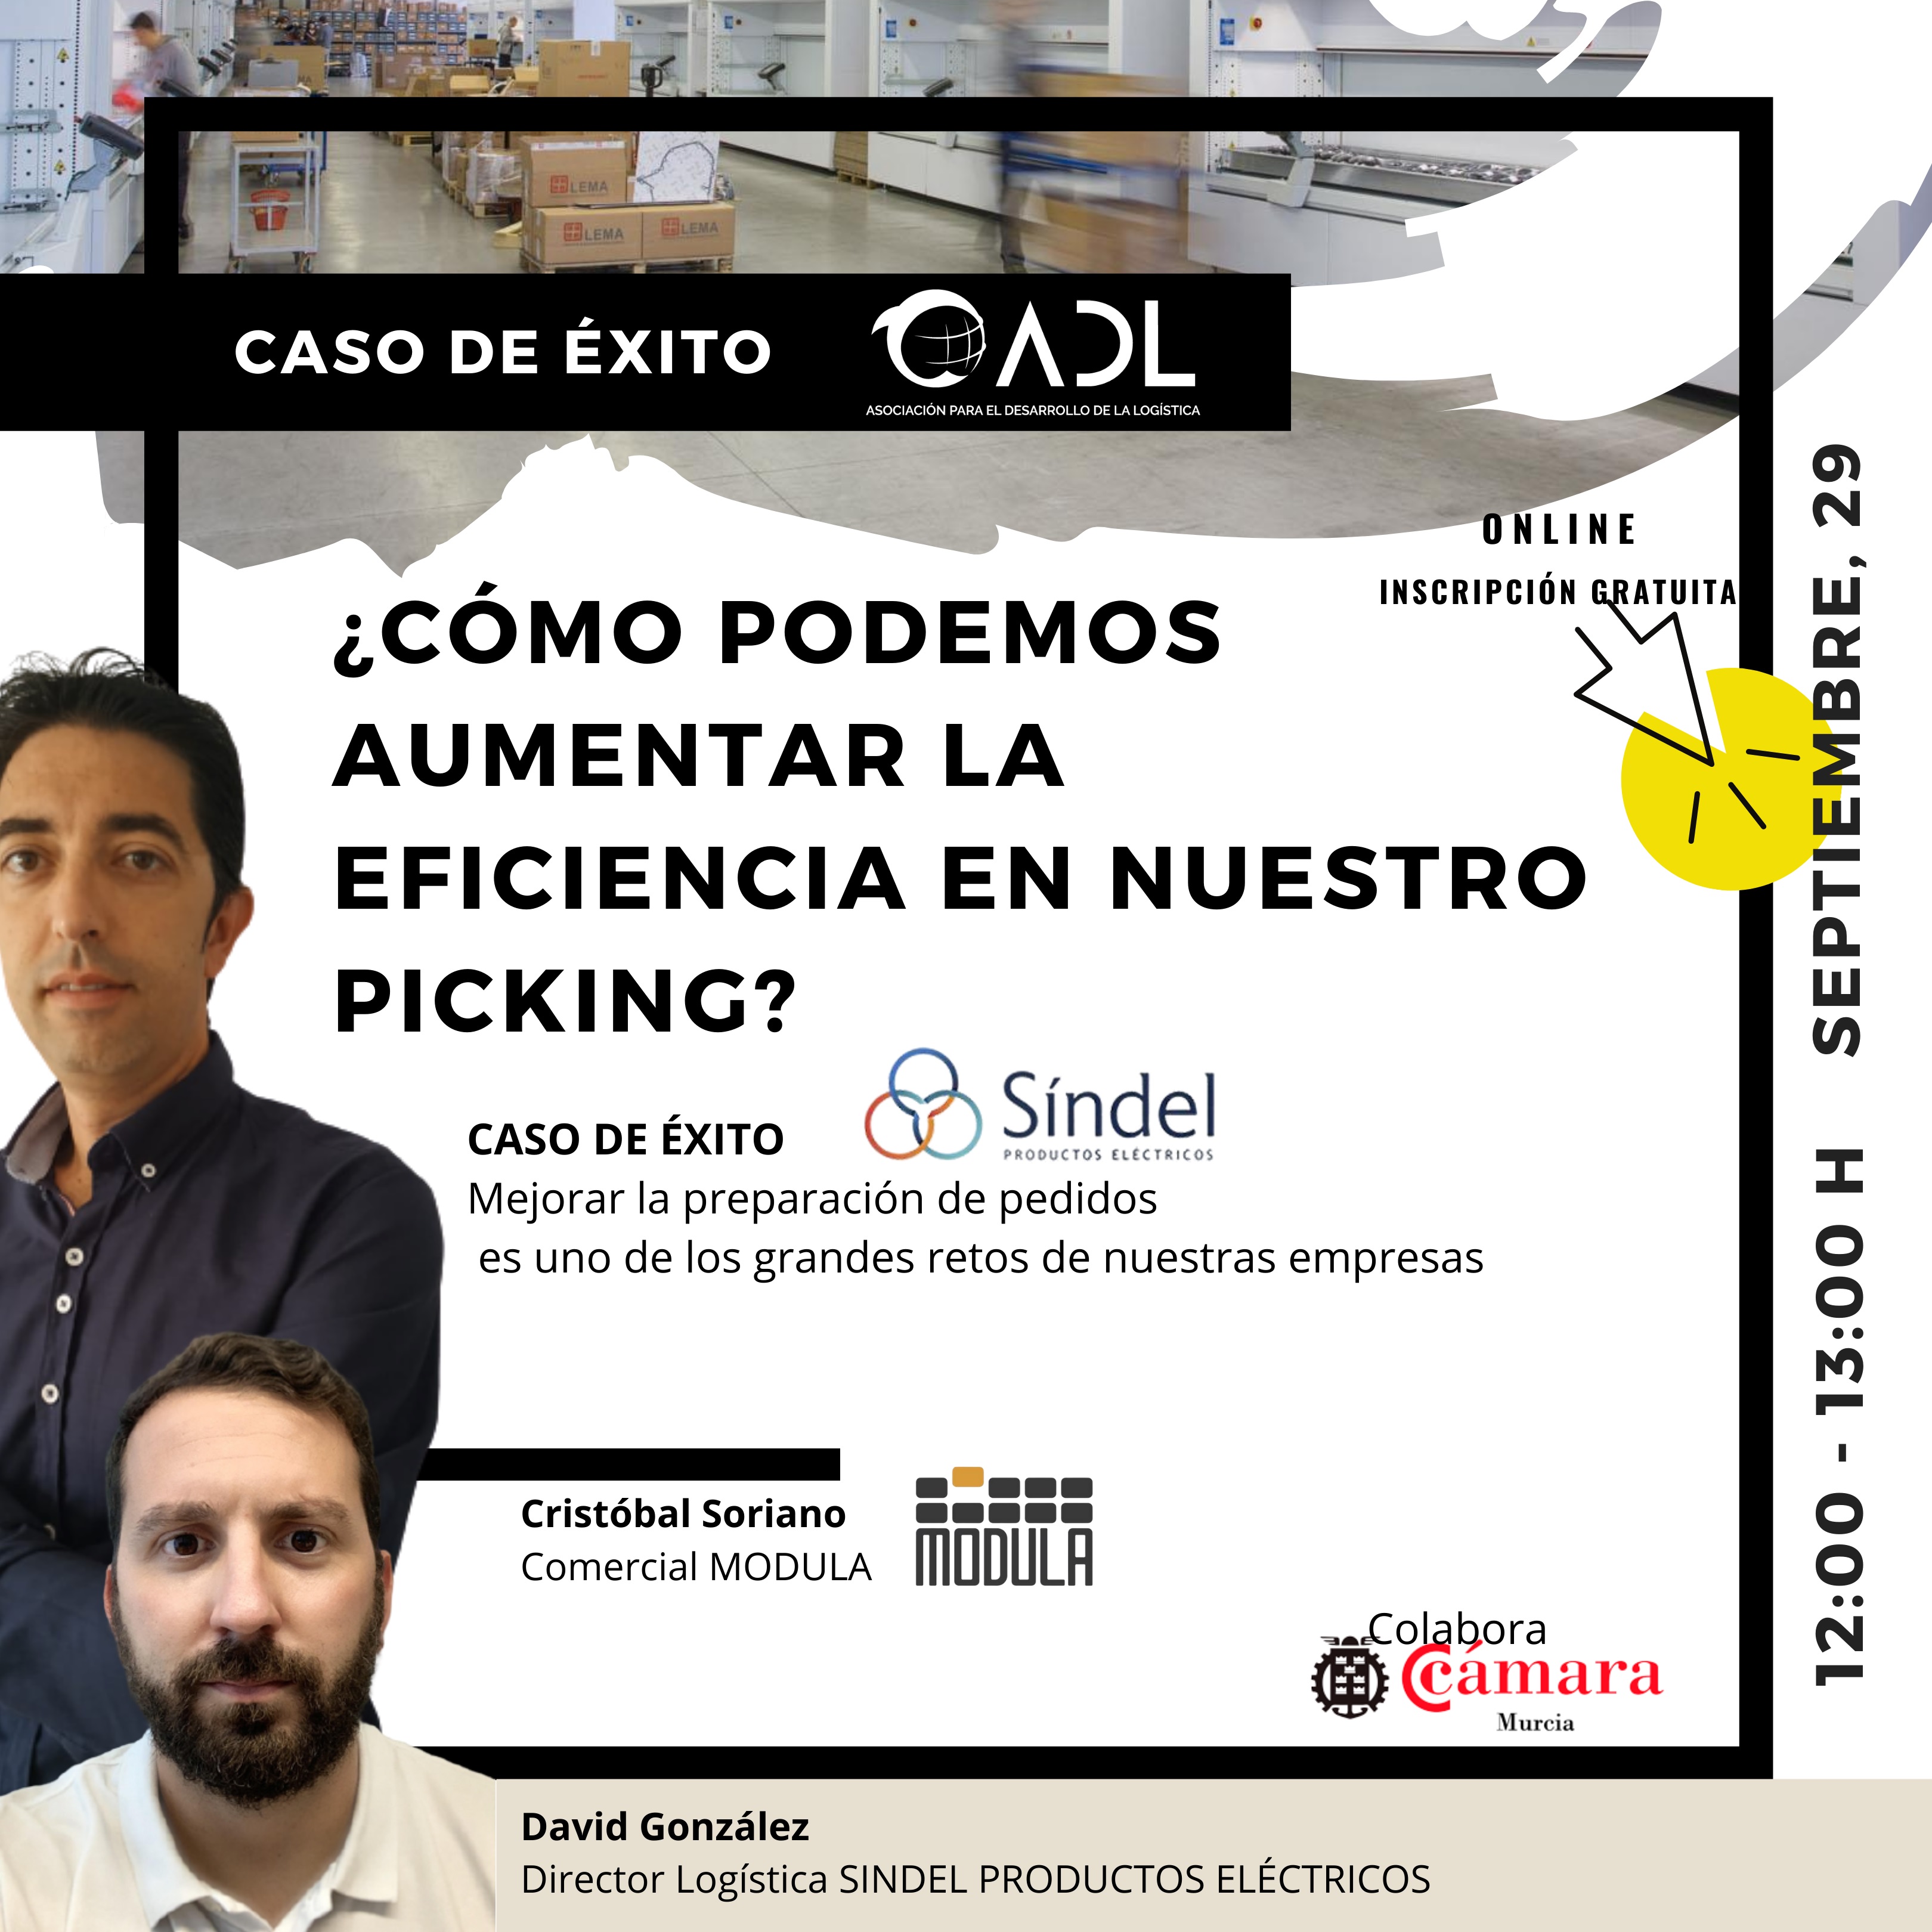 Seminario Picking caso de éxito SINDEL - Cámara Comercio Murcia